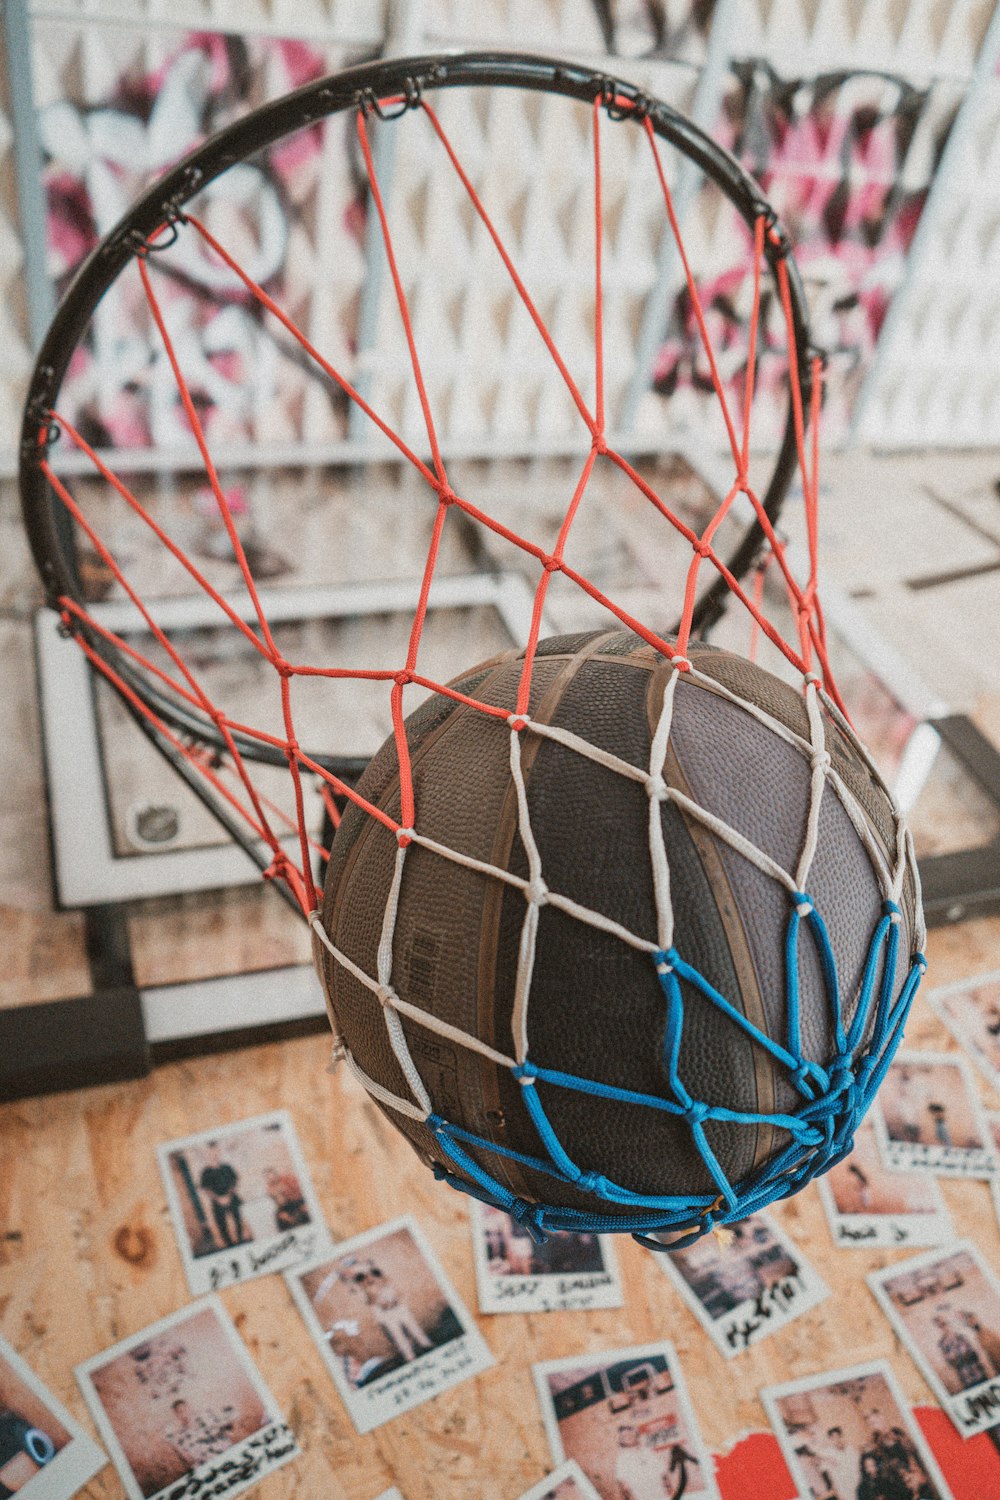 a basketball inside of a net on the floor